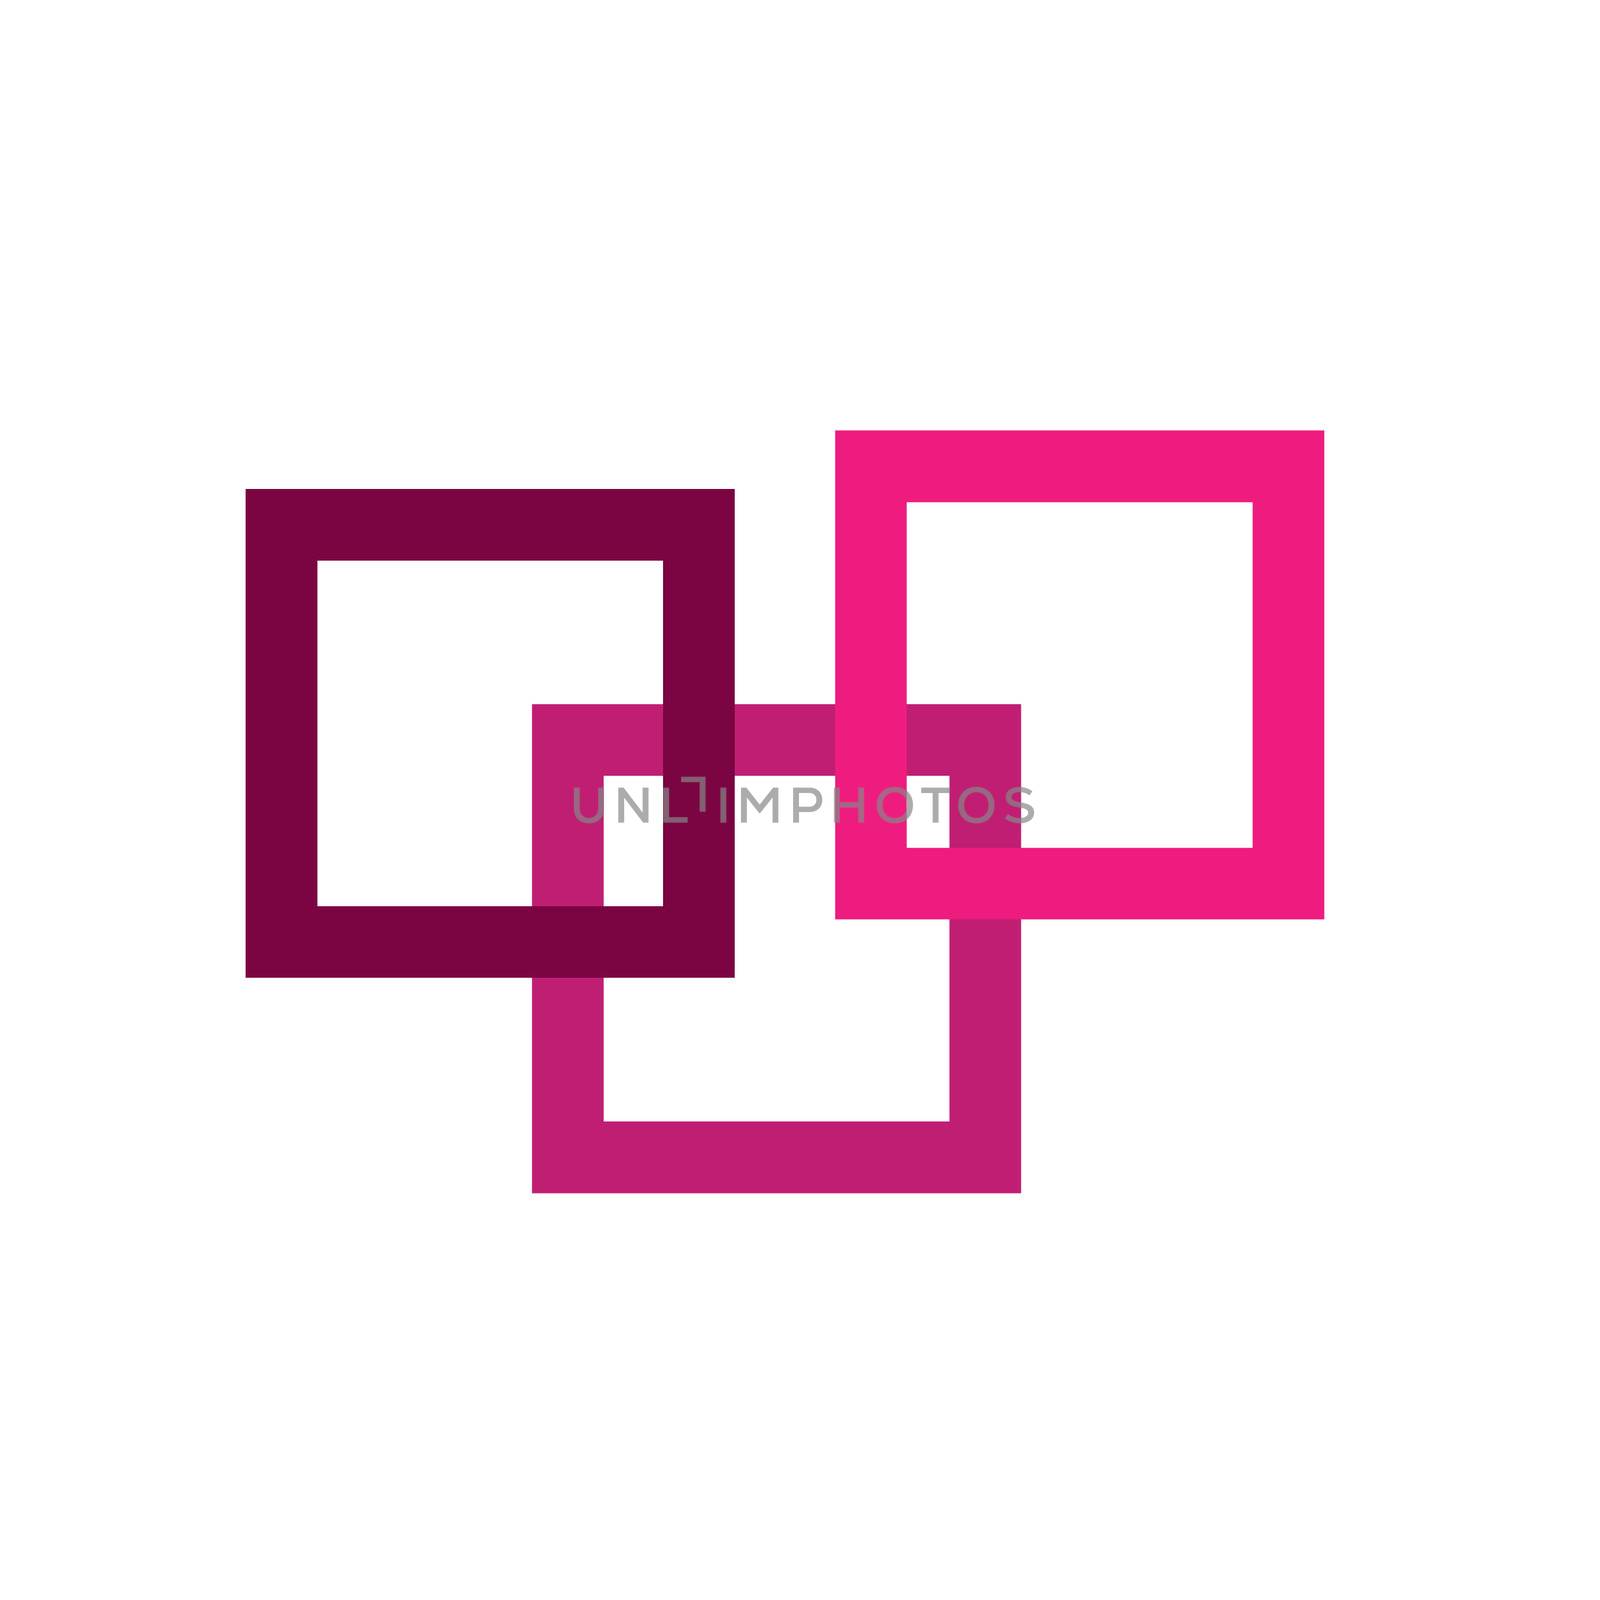 Pink Company logo by shawlinmohd